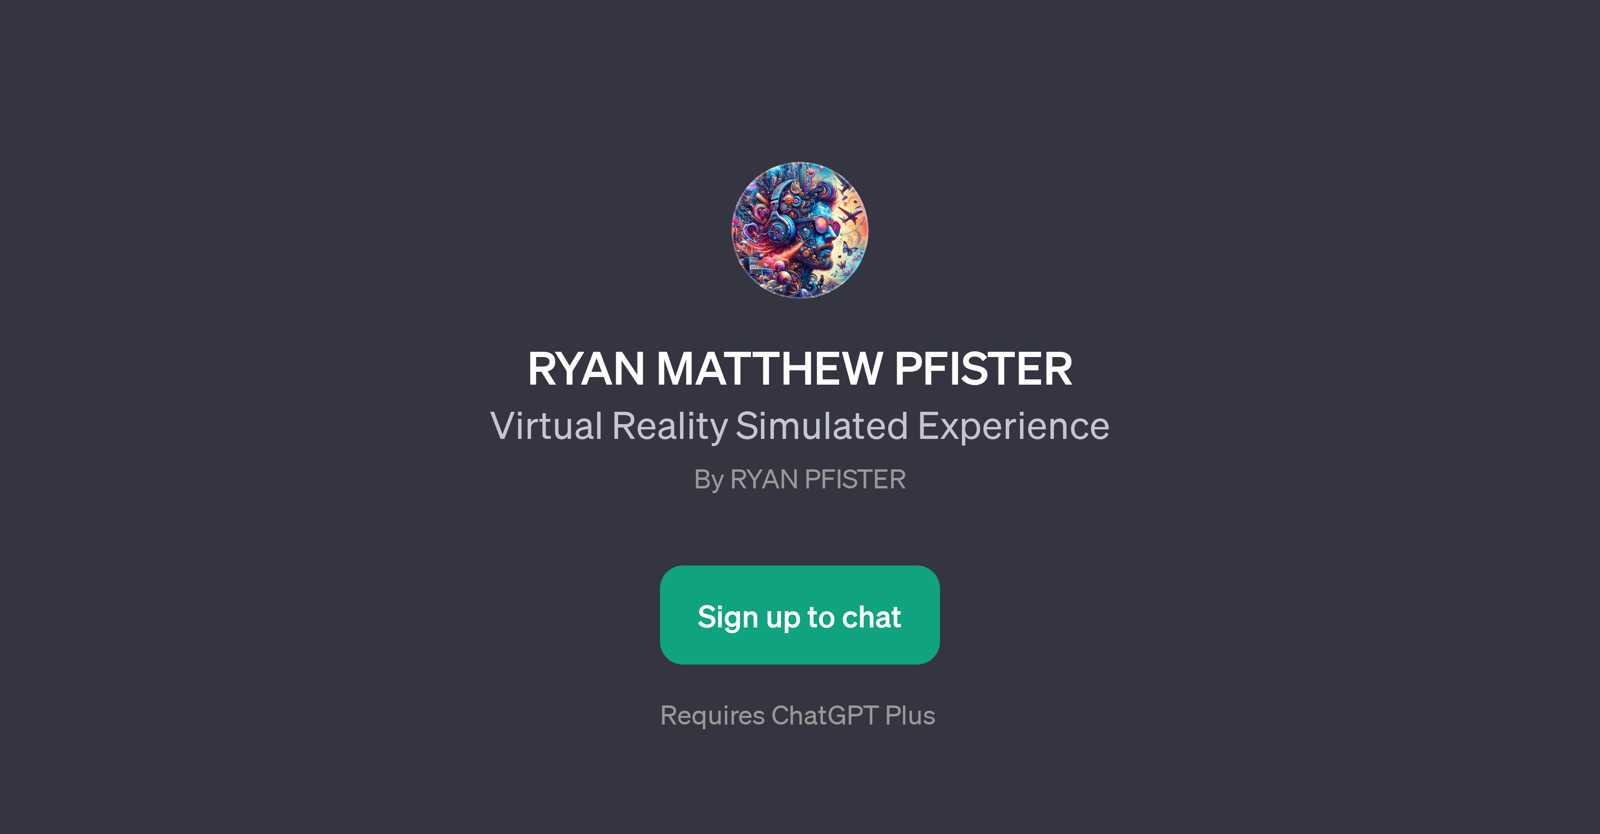 RYAN MATTHEW PFISTER website